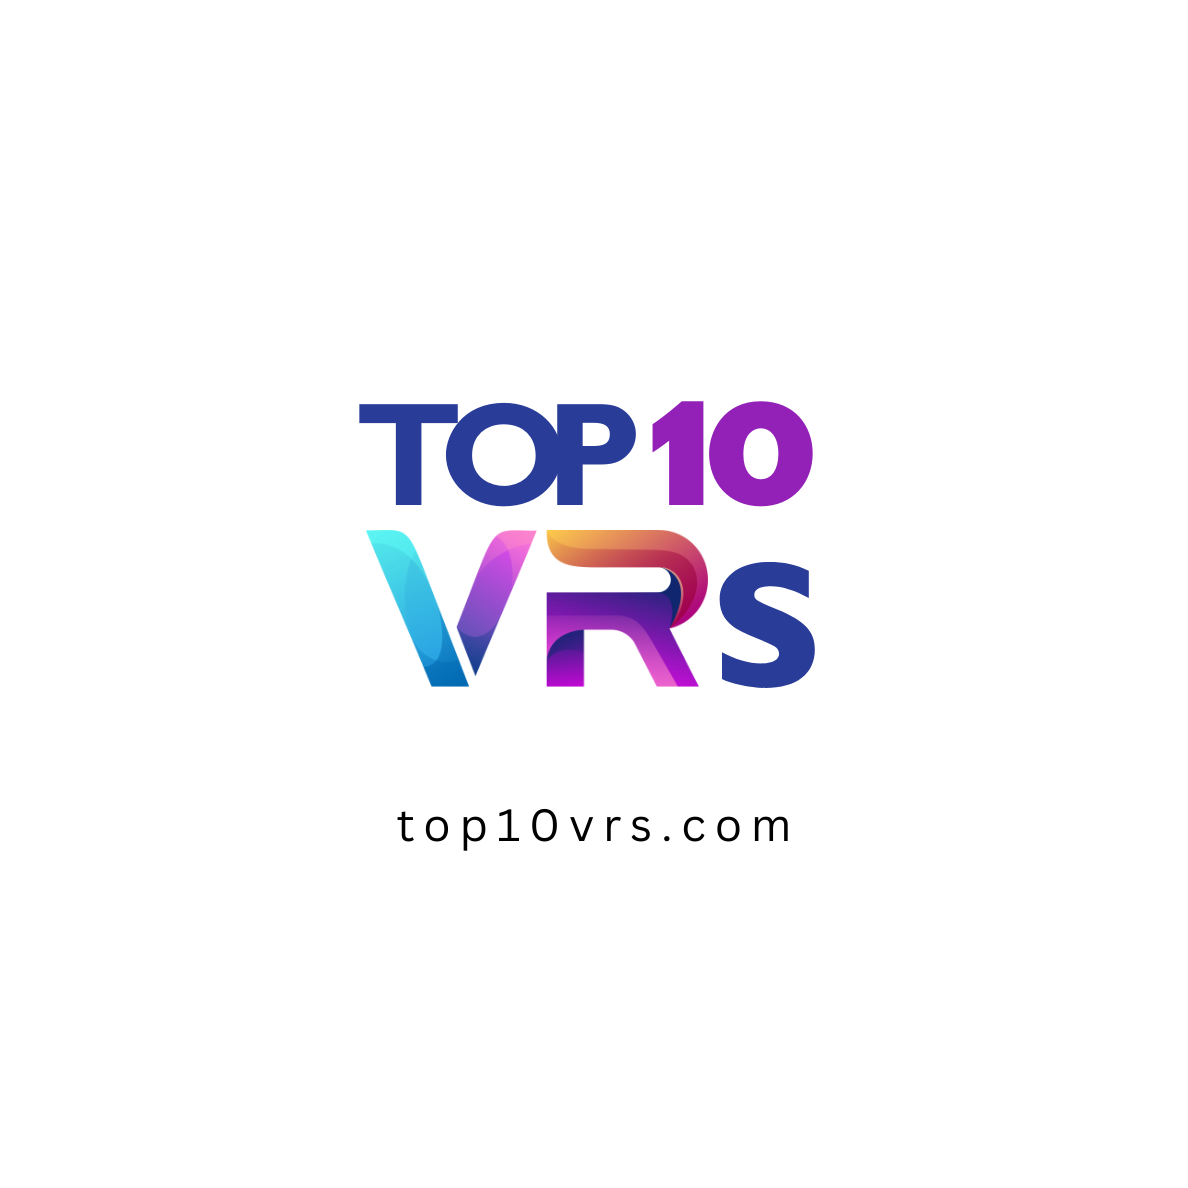 top10vrs.com - domain for sale